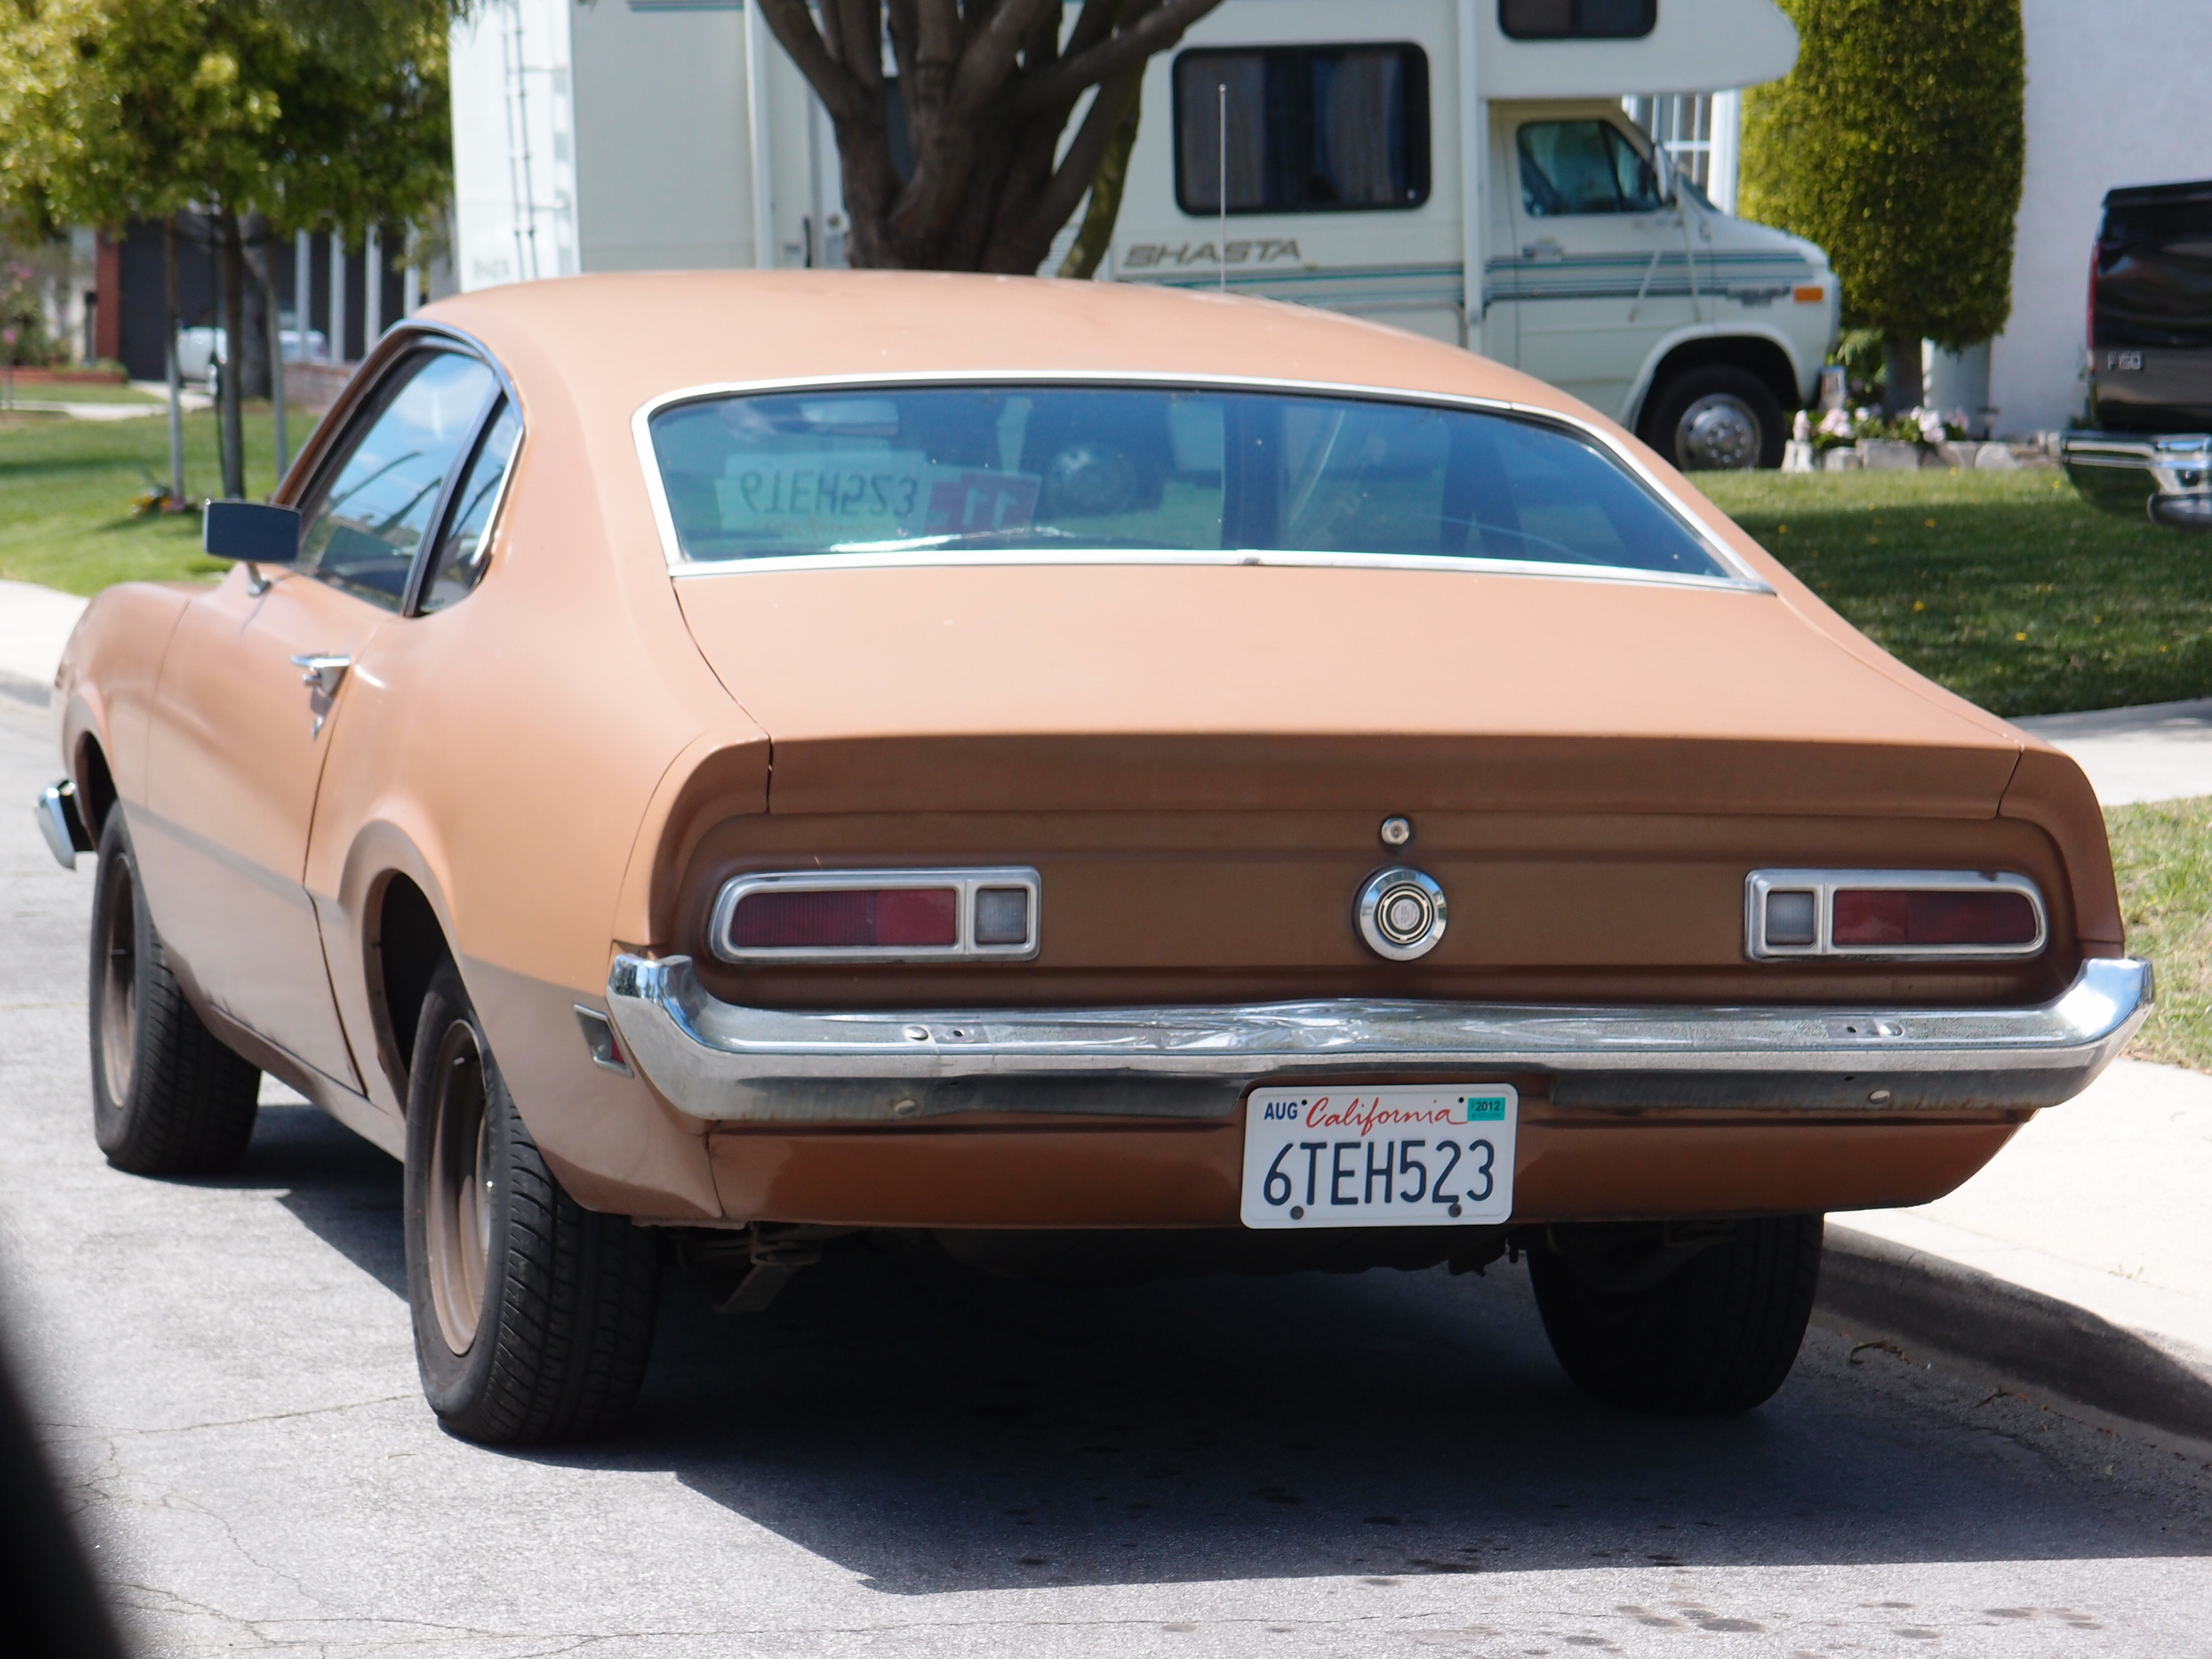 1973 Ford Maverick – Roadside Rambler